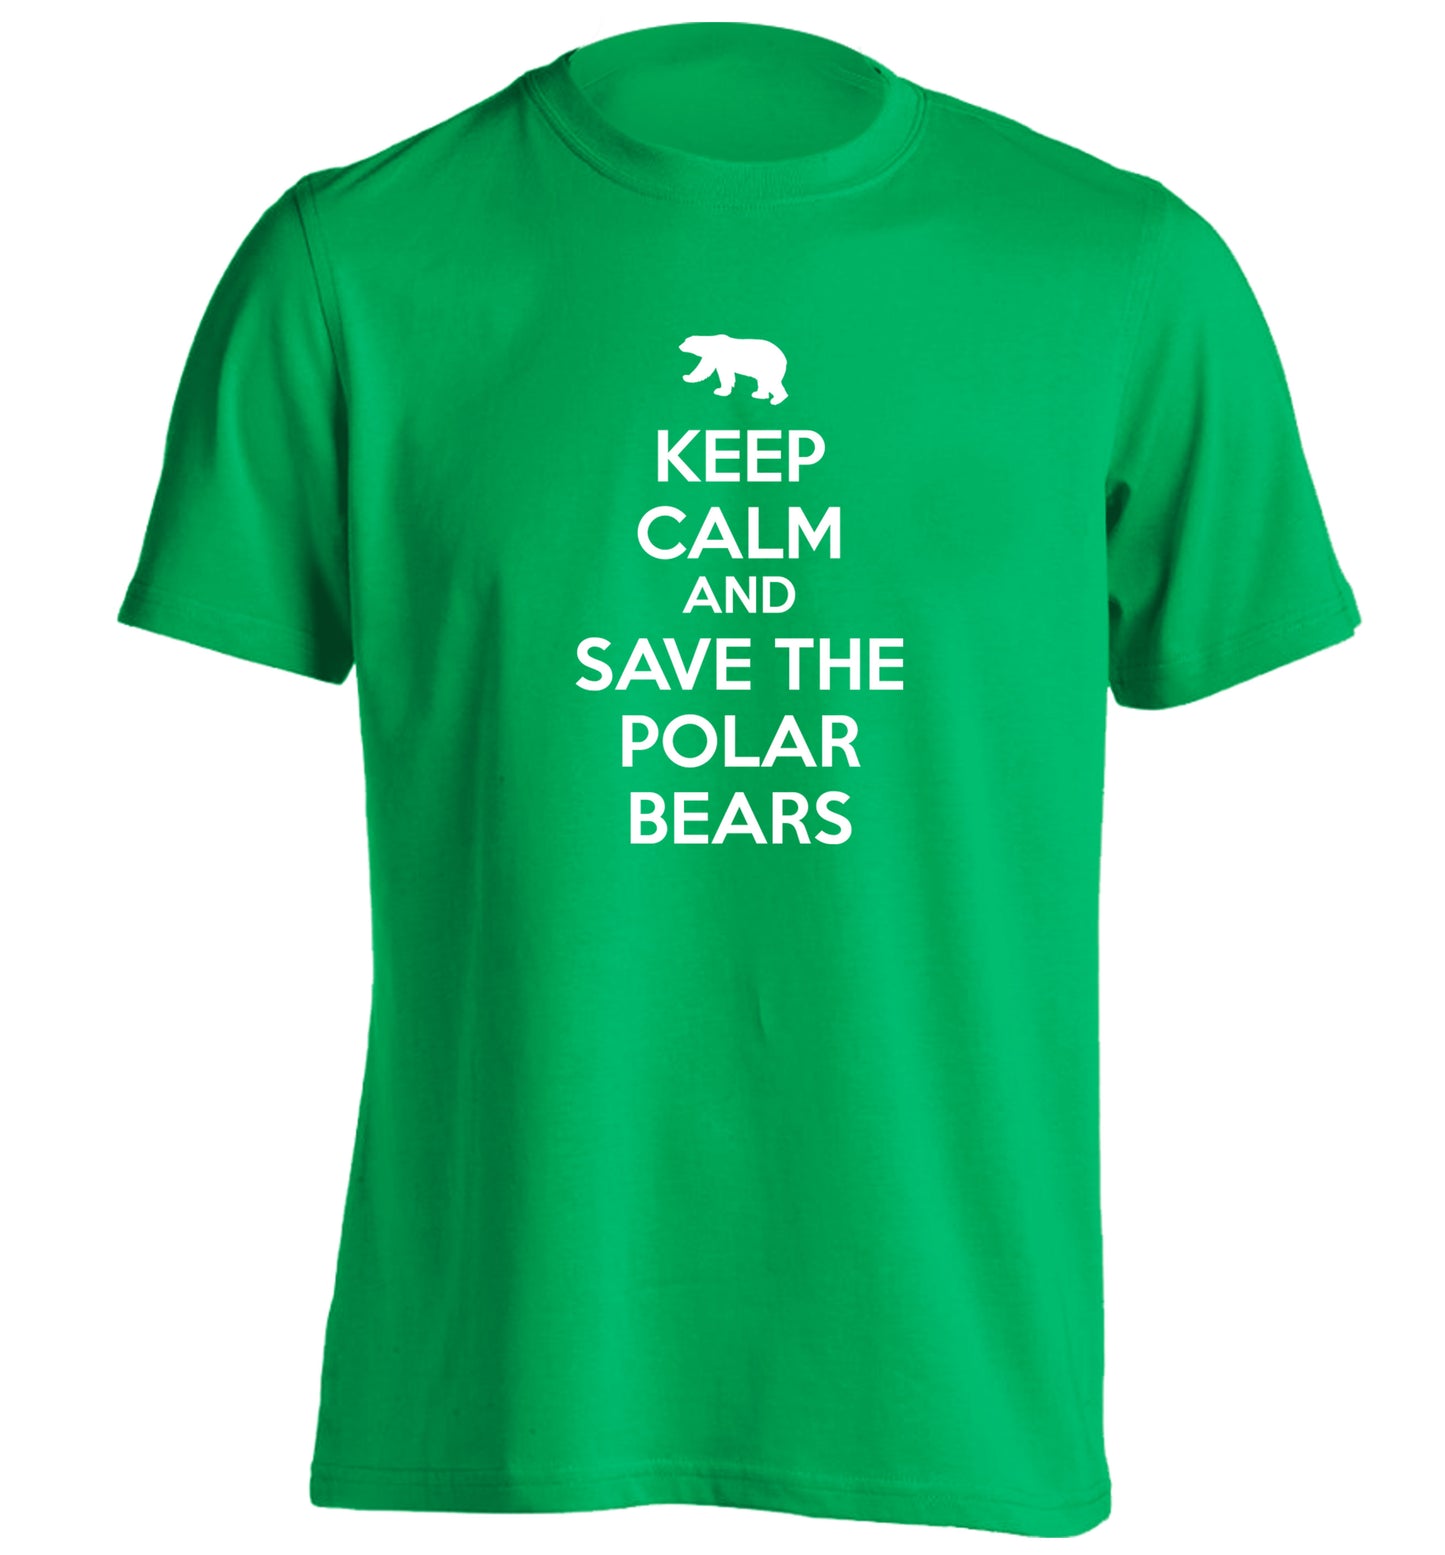 Keep calm and save the polar bears adults unisex green Tshirt 2XL